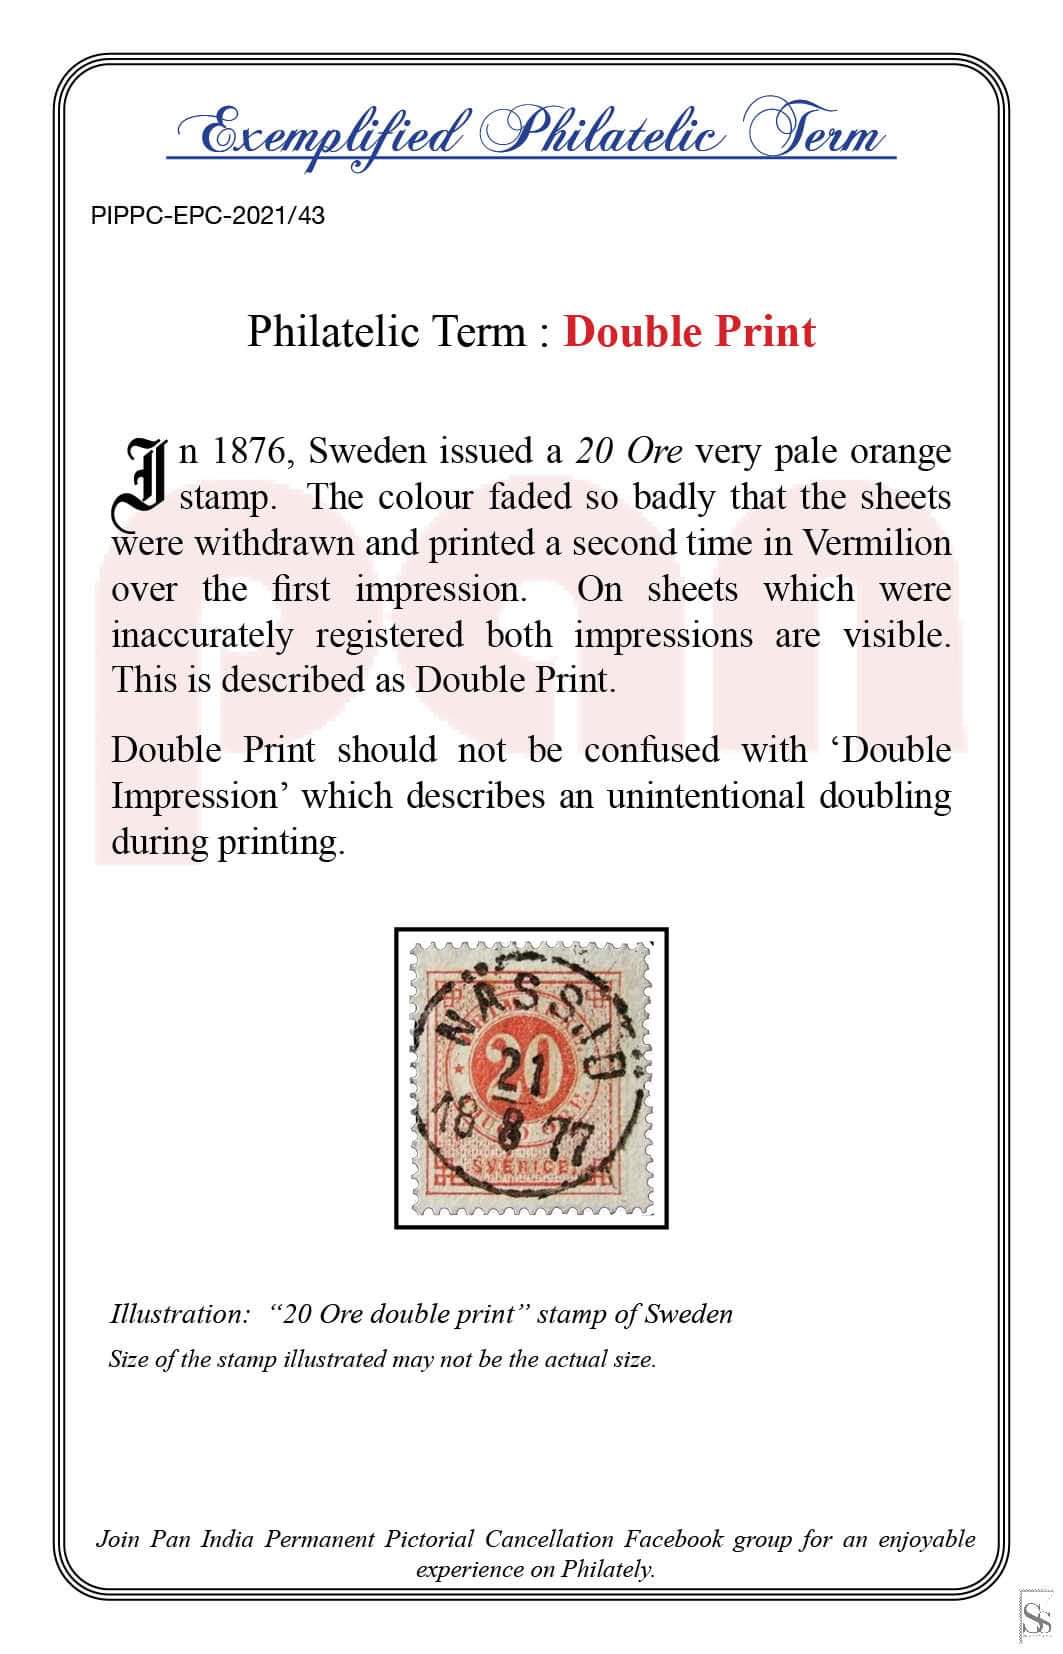 43. Today's Exemplified Philatelic term- Double Print